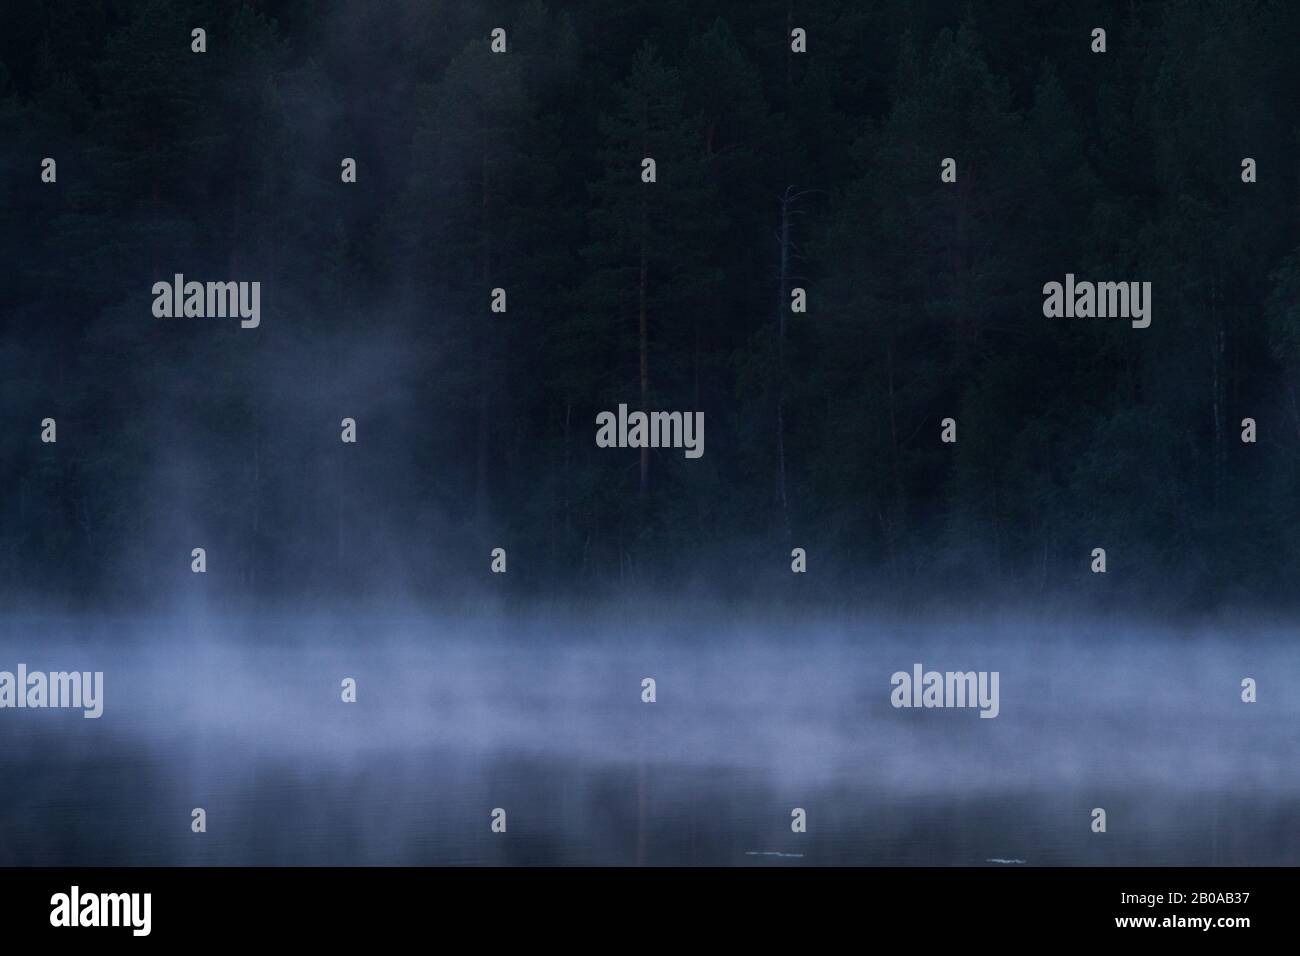 Brouillard sur un lac dans la taïga, Finlande Banque D'Images